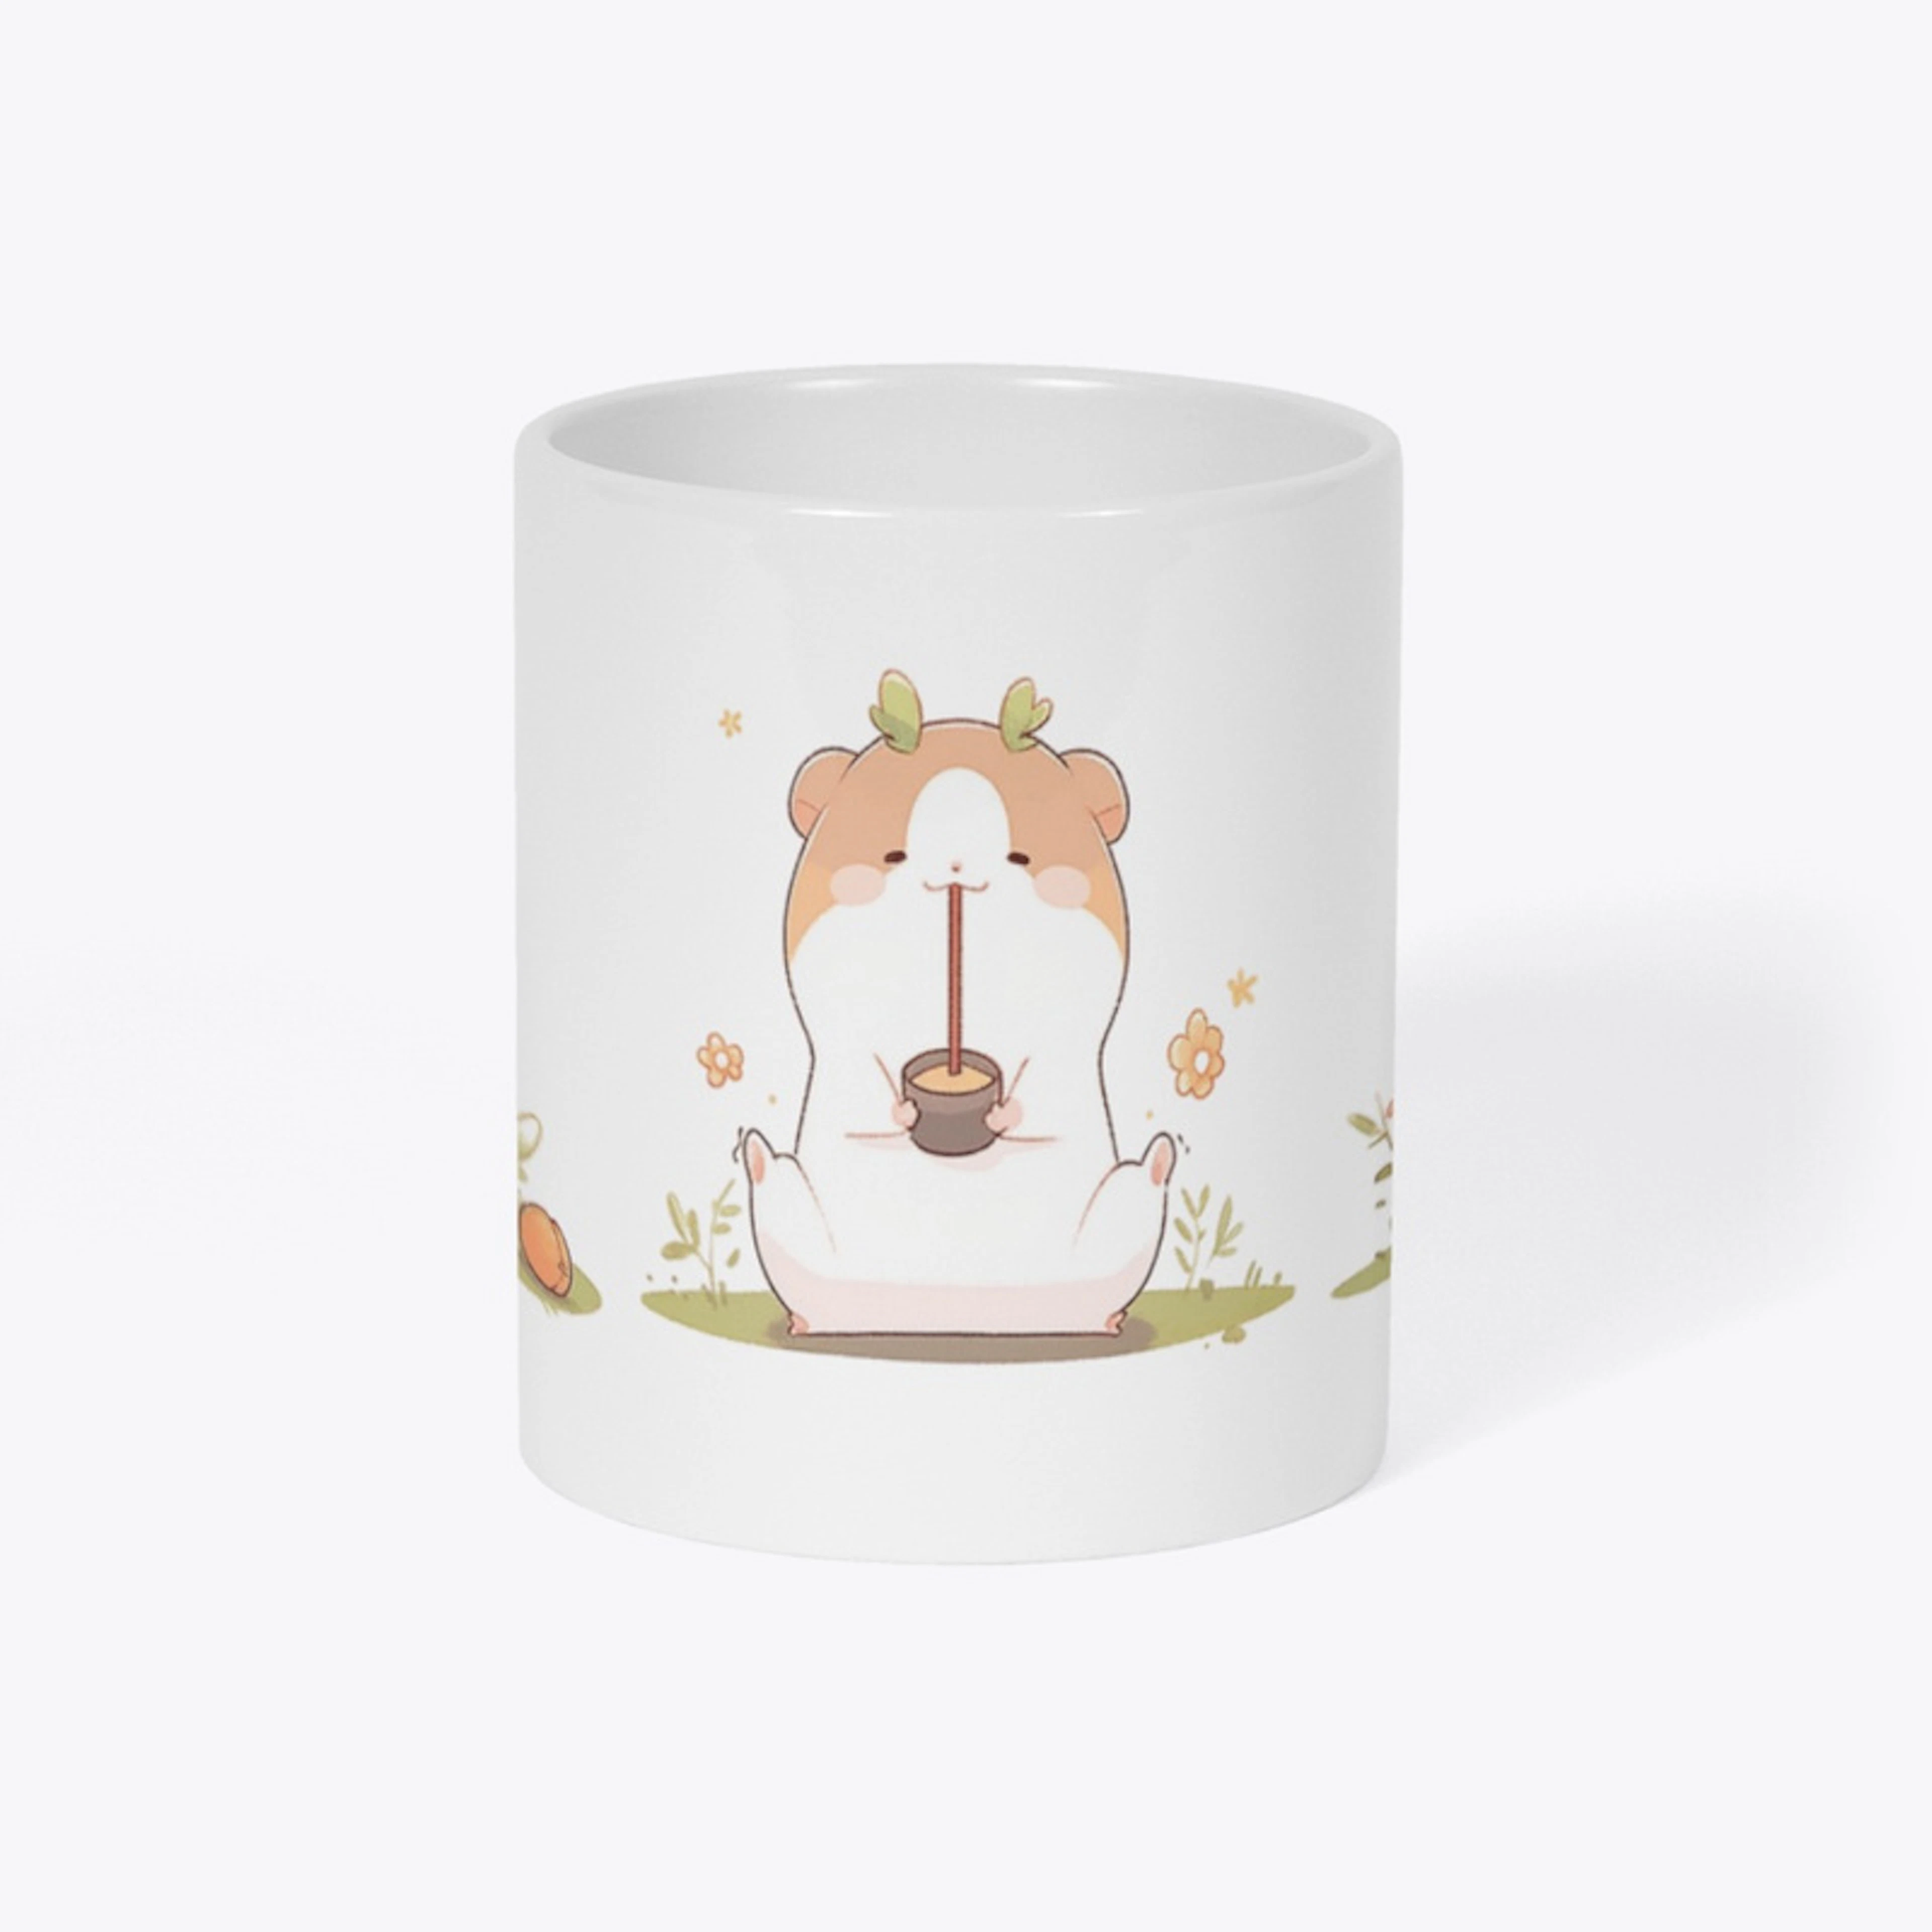 Hamster Yoga Mug - A Zen Sip!